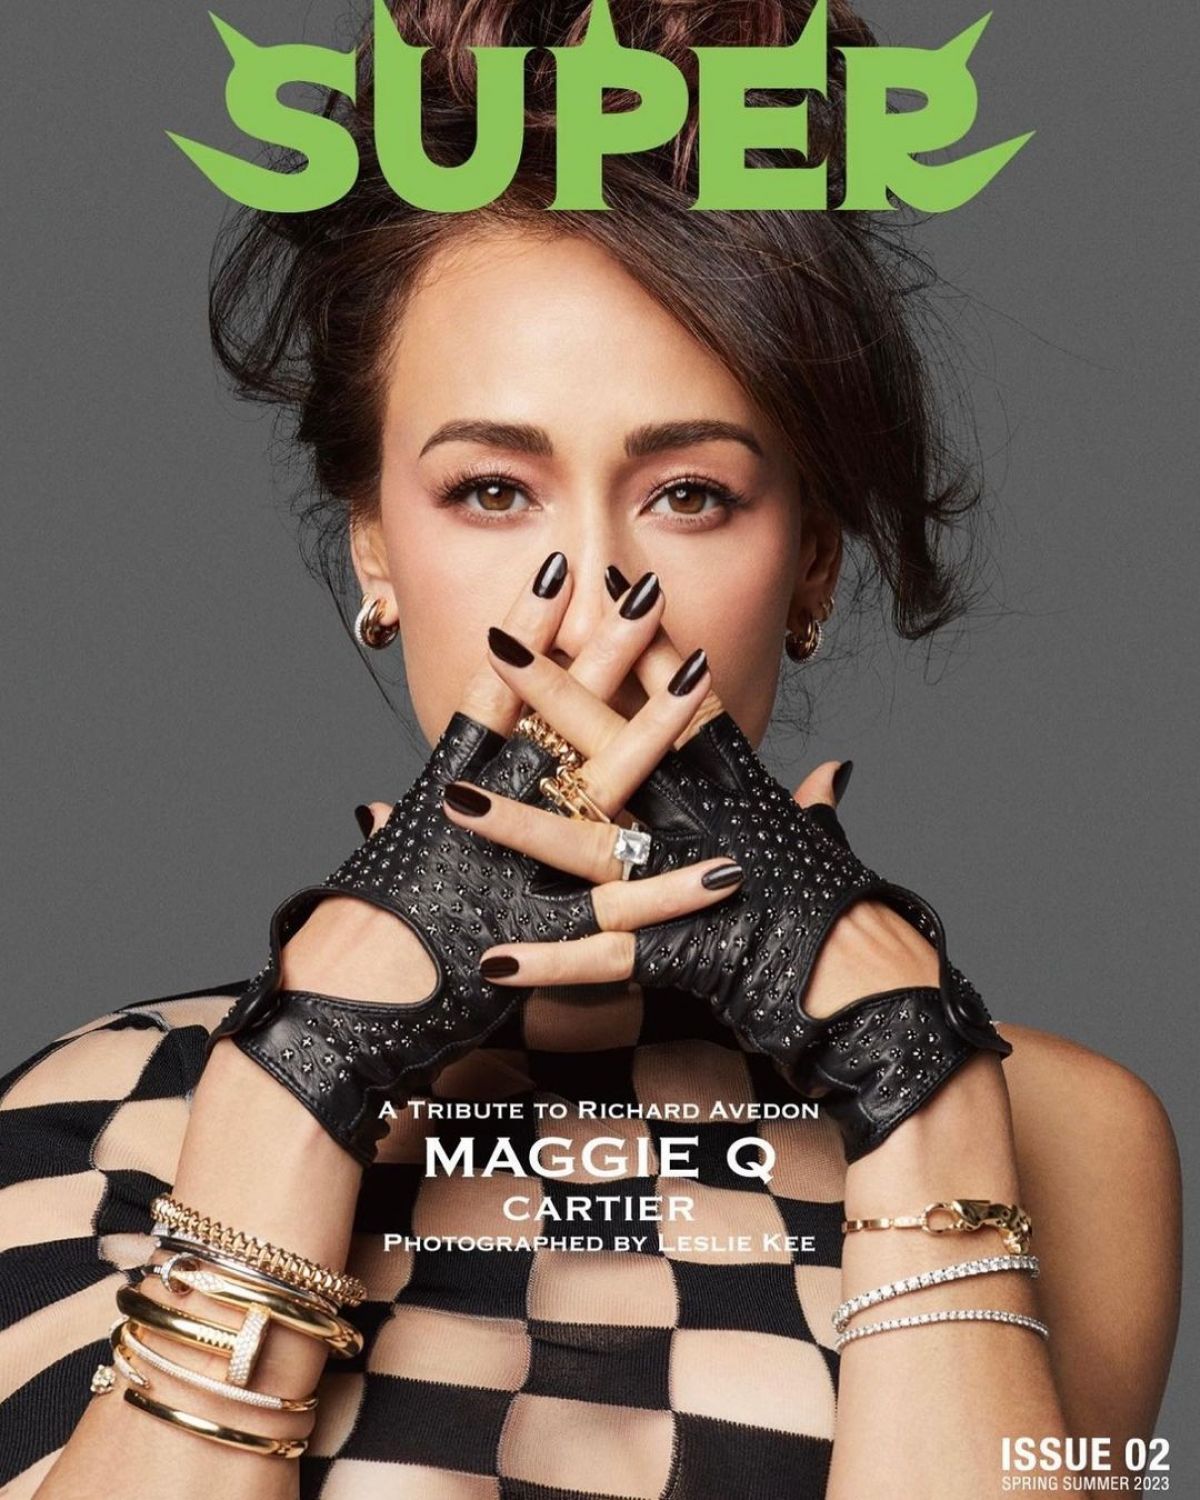 Super magazine. Maggie Style.